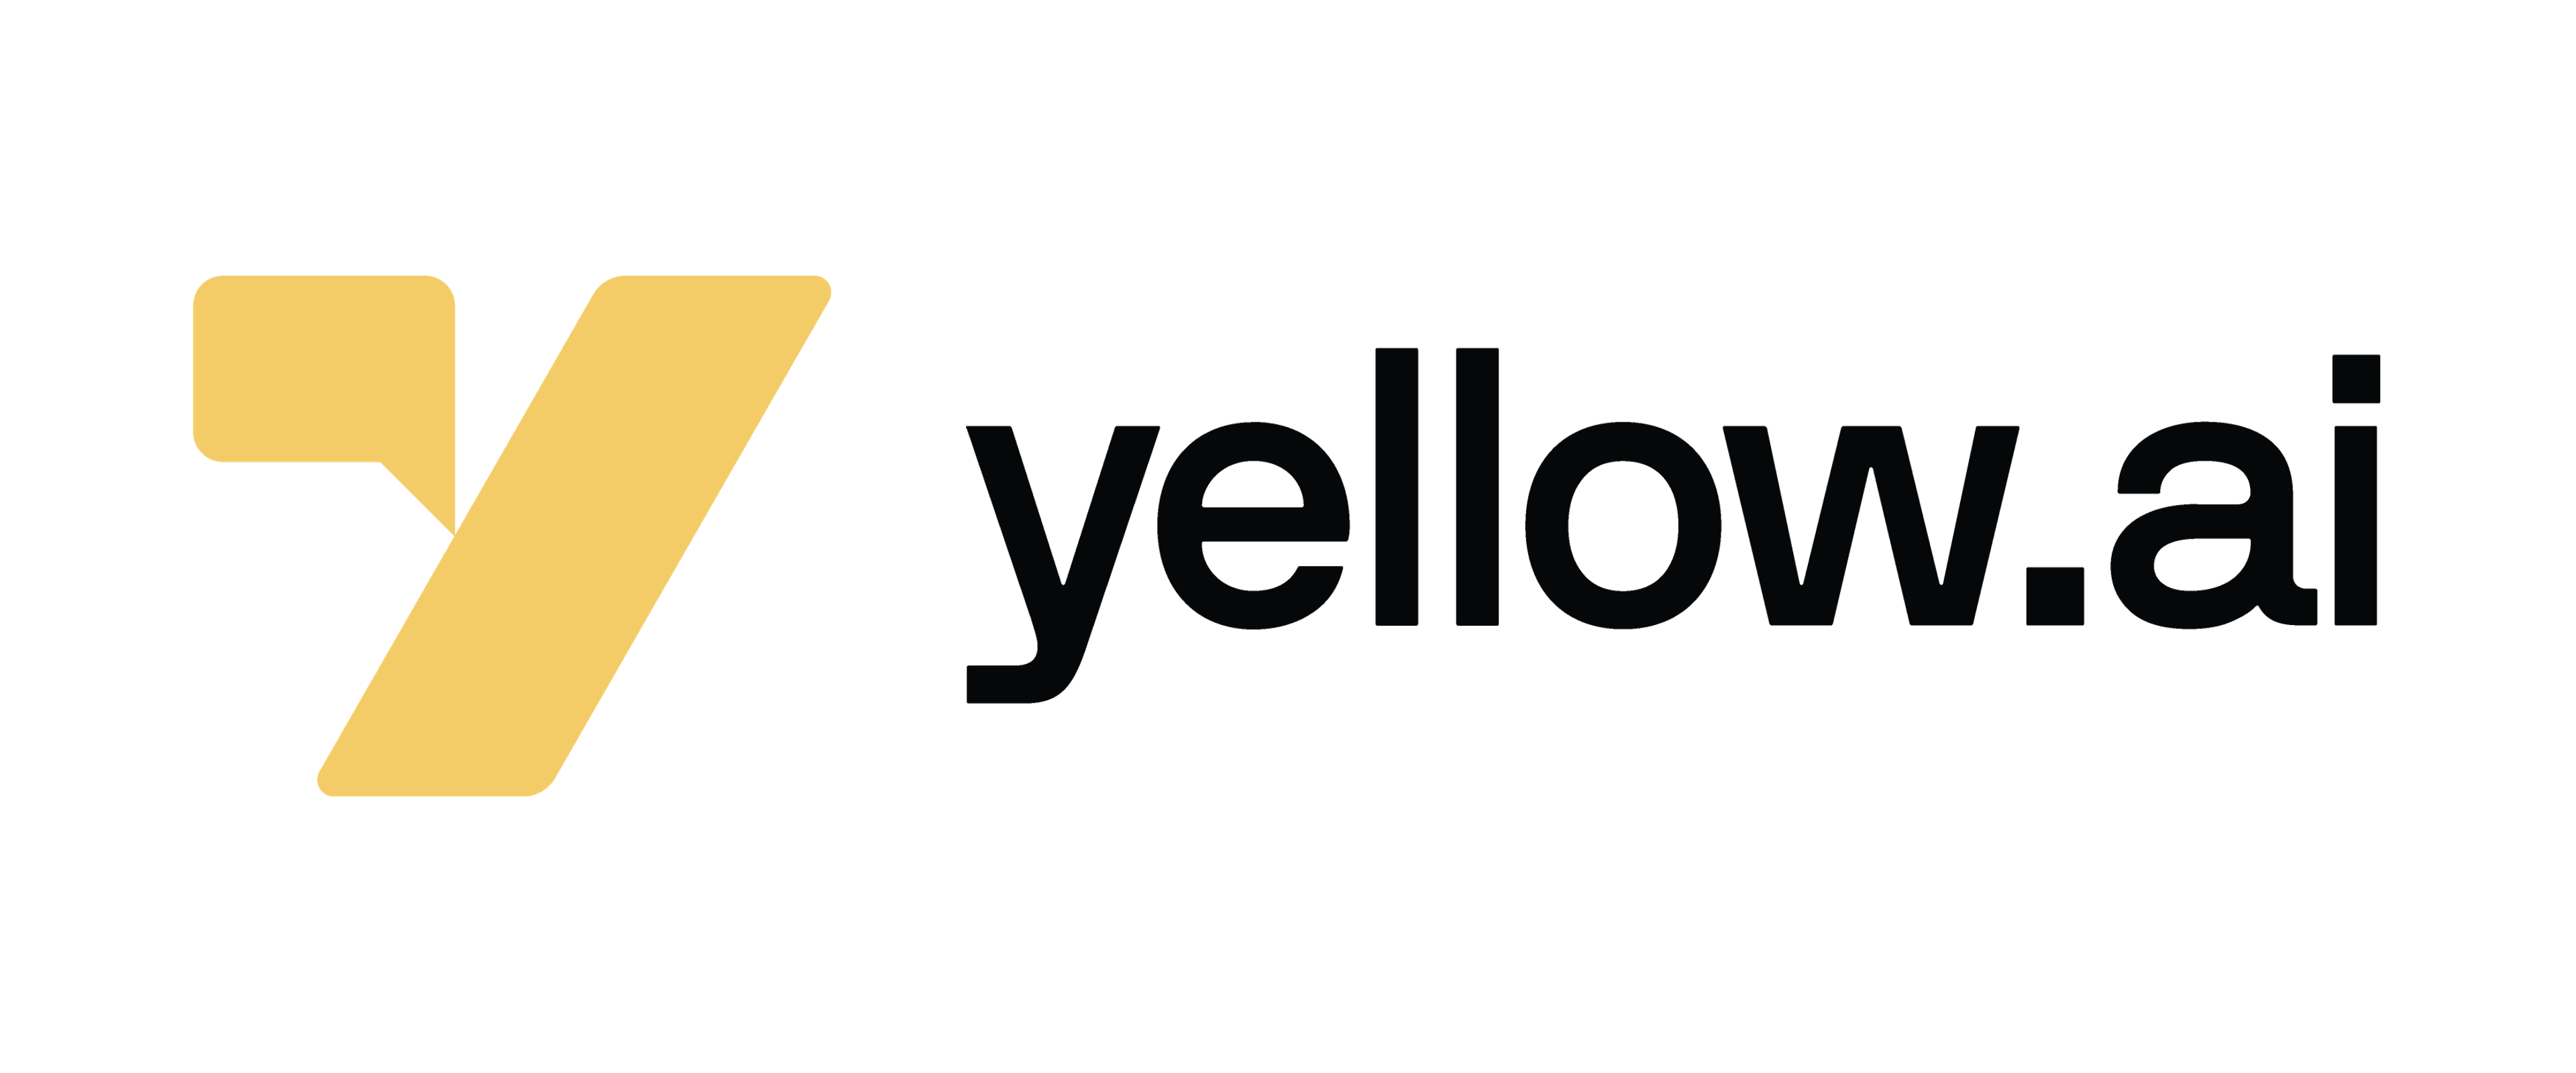 yellow.ai Logo